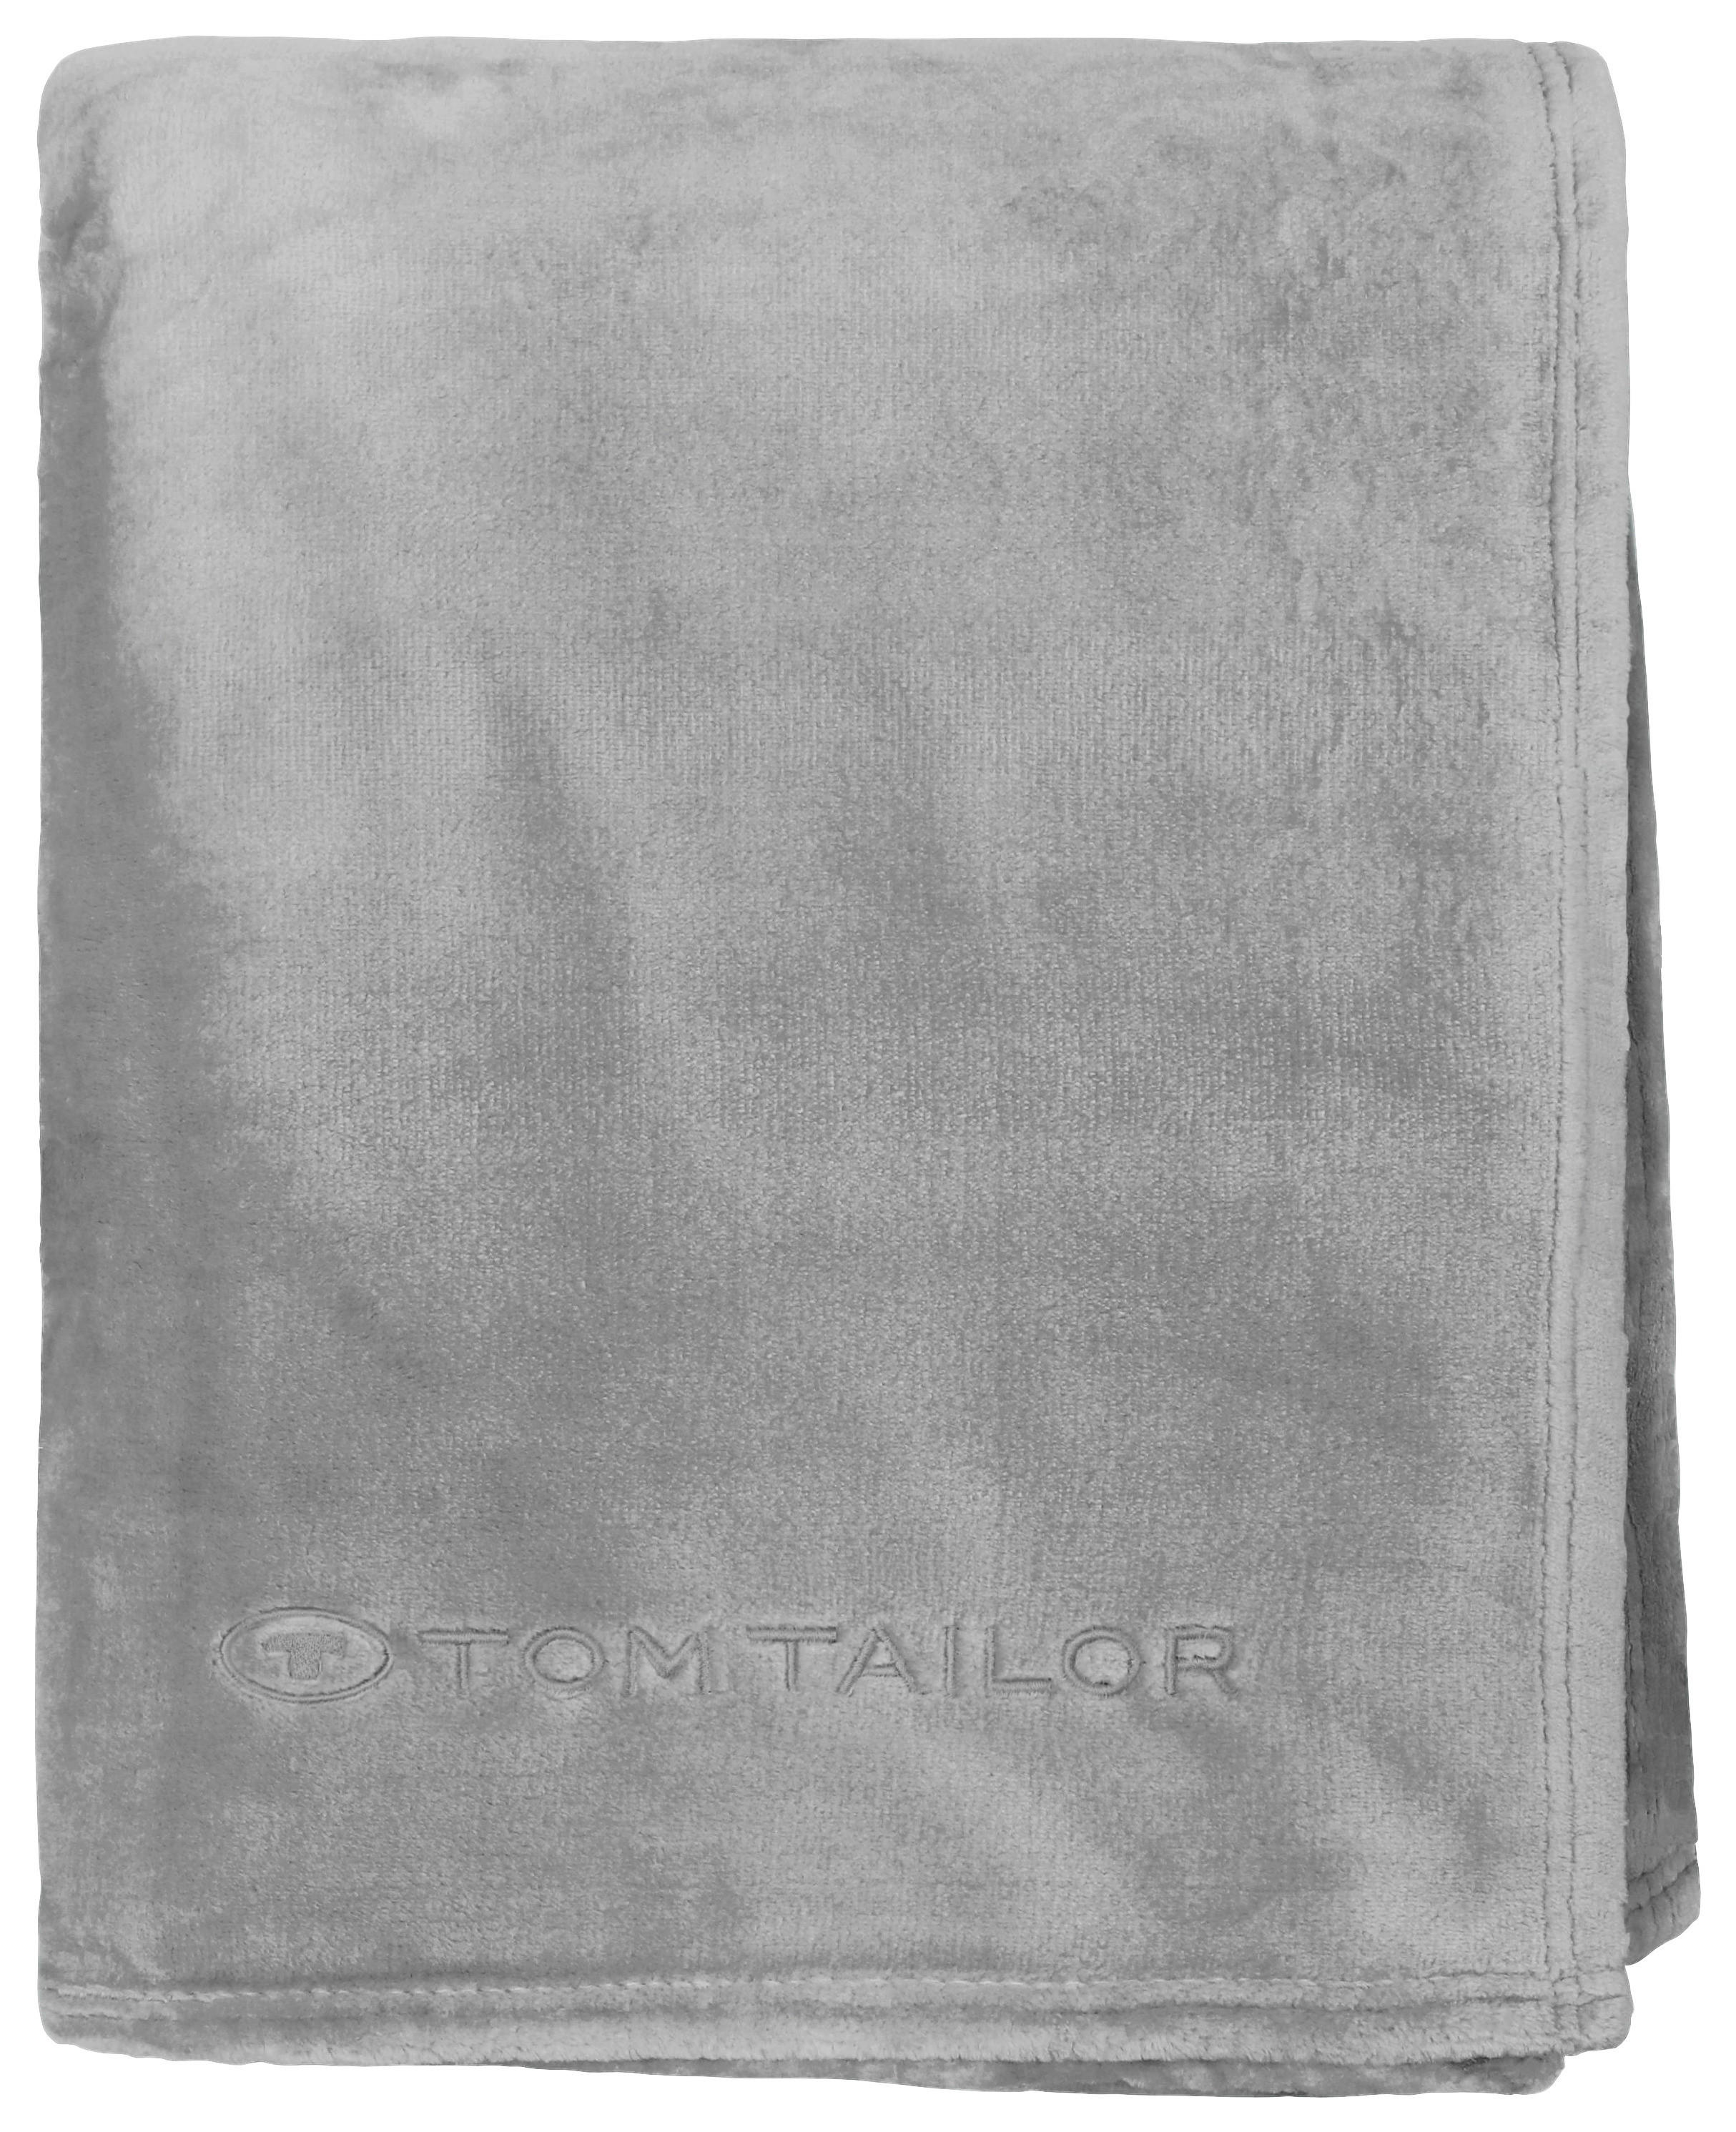 DECKE 150/200 cm  - Hellgrau, KONVENTIONELL, Textil (150/200cm) - Tom Tailor